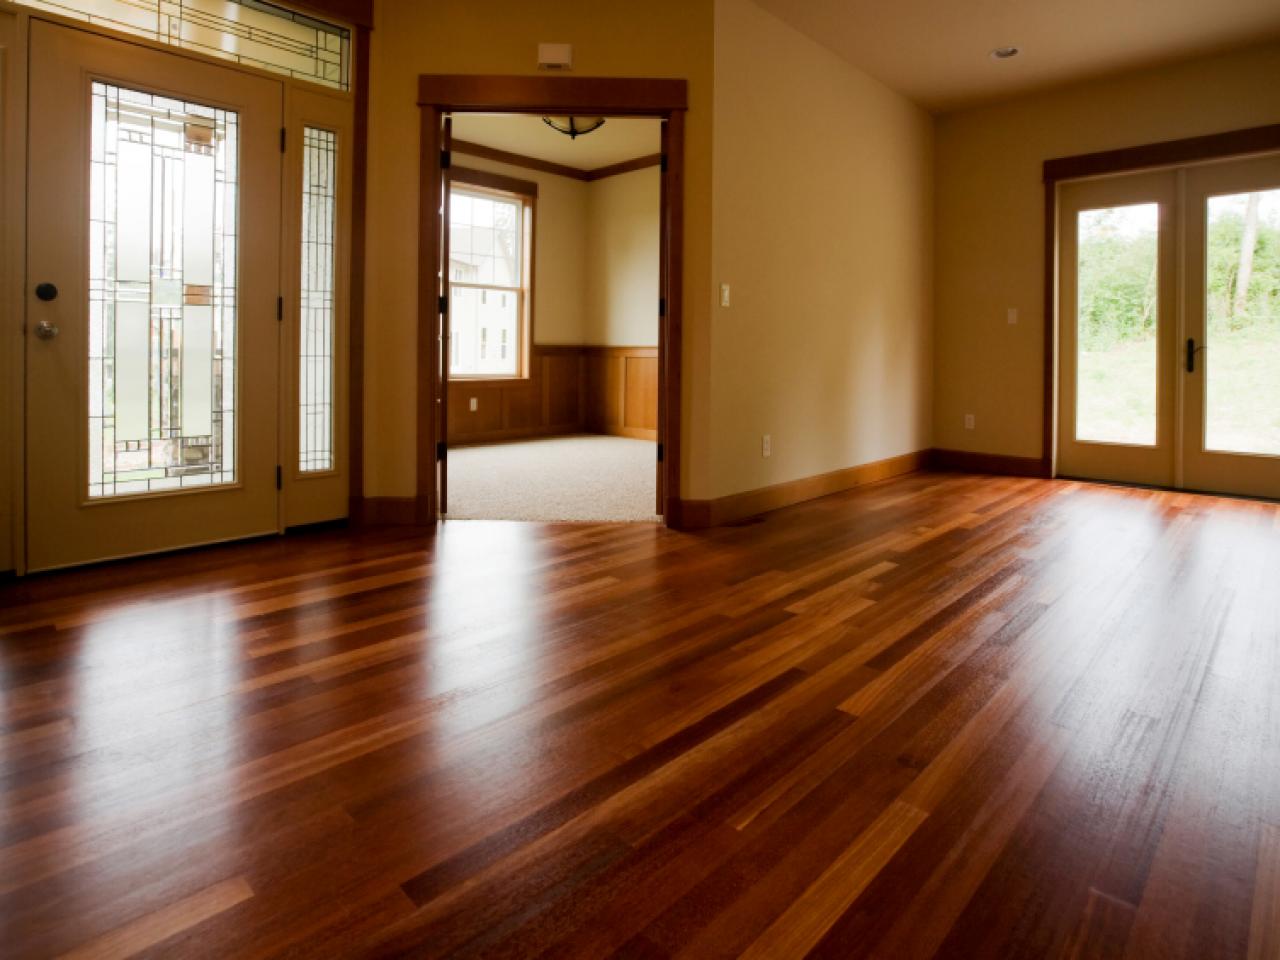 Cleaning Tile Wood And Vinyl Floors, Pics Of Hardwood Floors In Homes